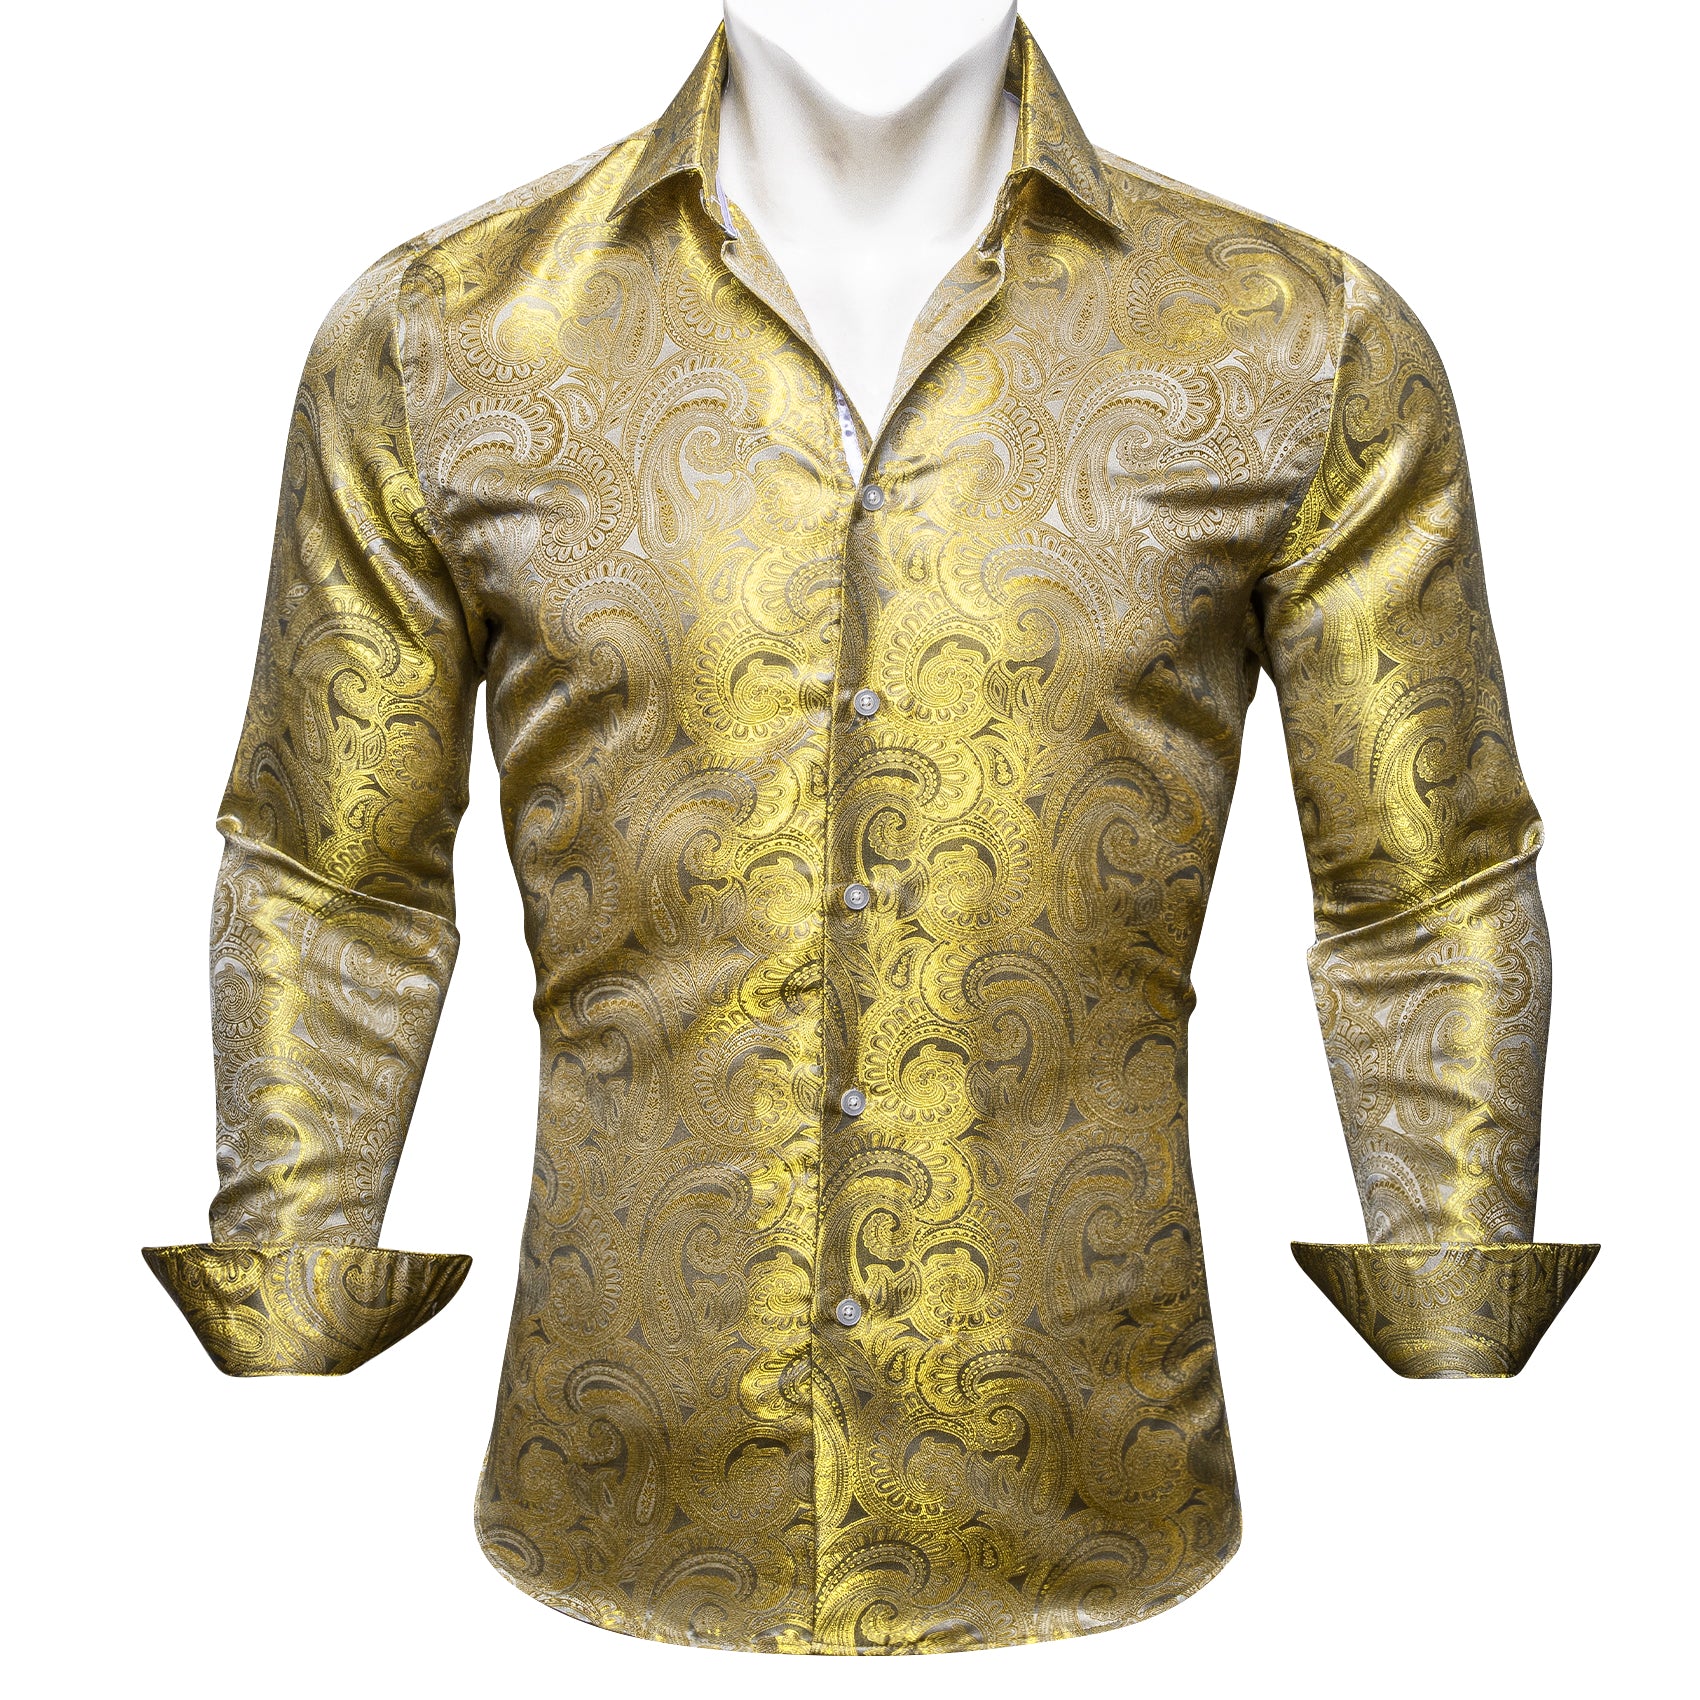 Barry.wang Button Down Shirt Gold Paisley Silk Men's Long Sleeve Shirt